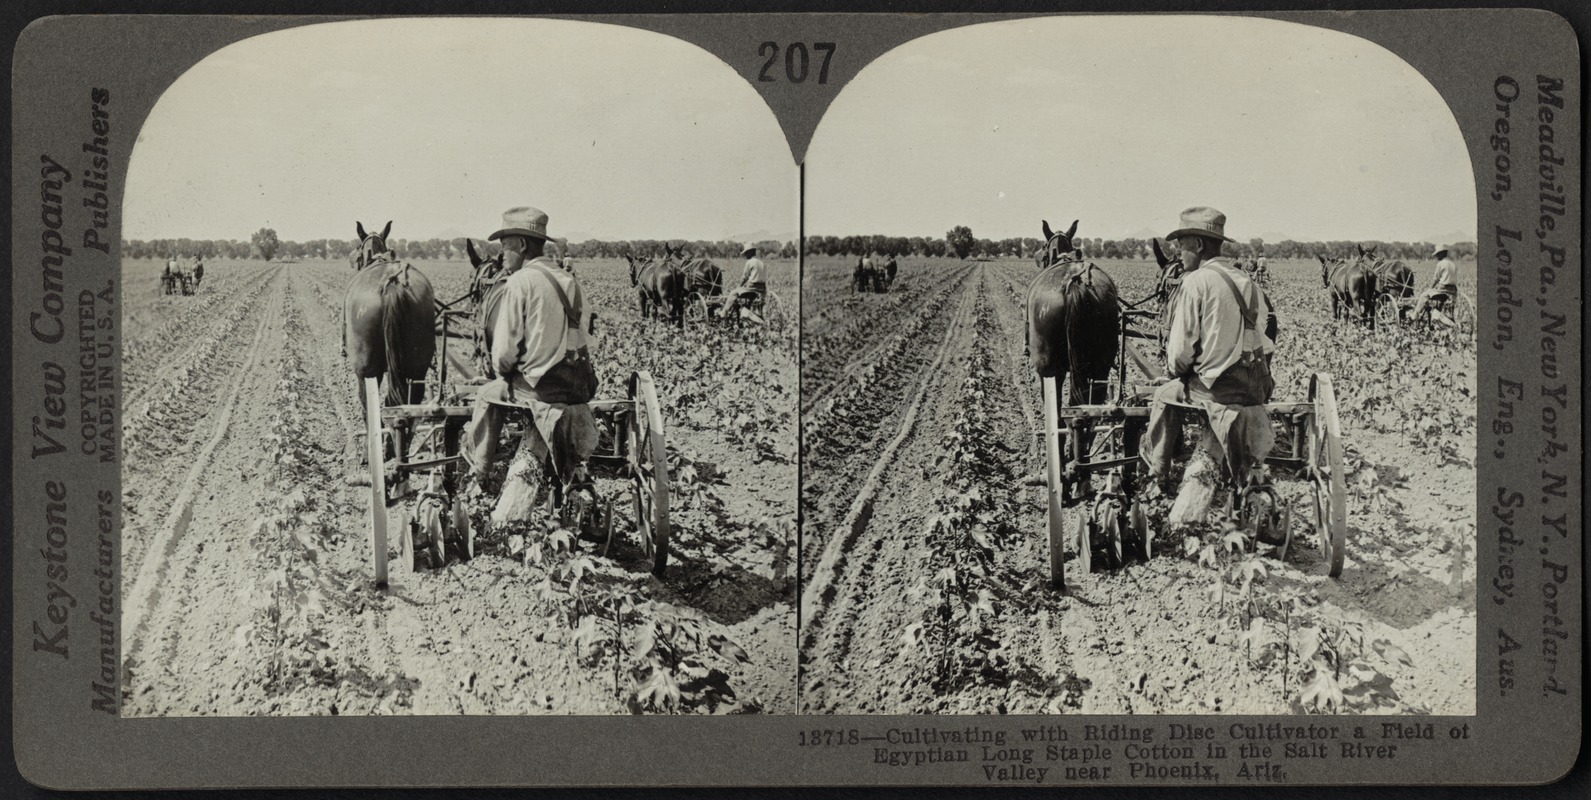 Cultivating Egyptian cotton, Arizona